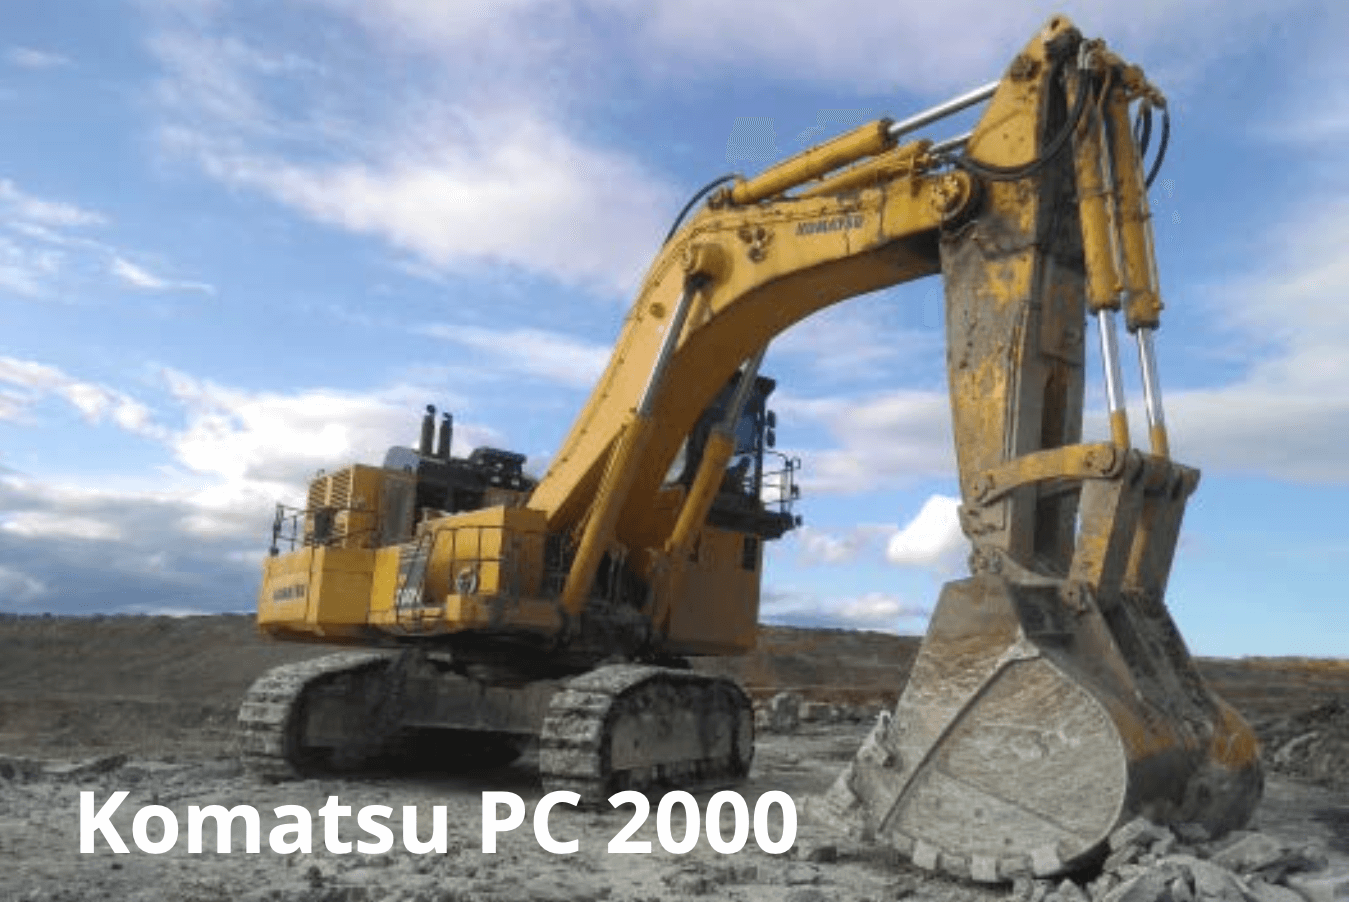 Контроль расхода топлива на экскаваторе Komatsu PC 2000